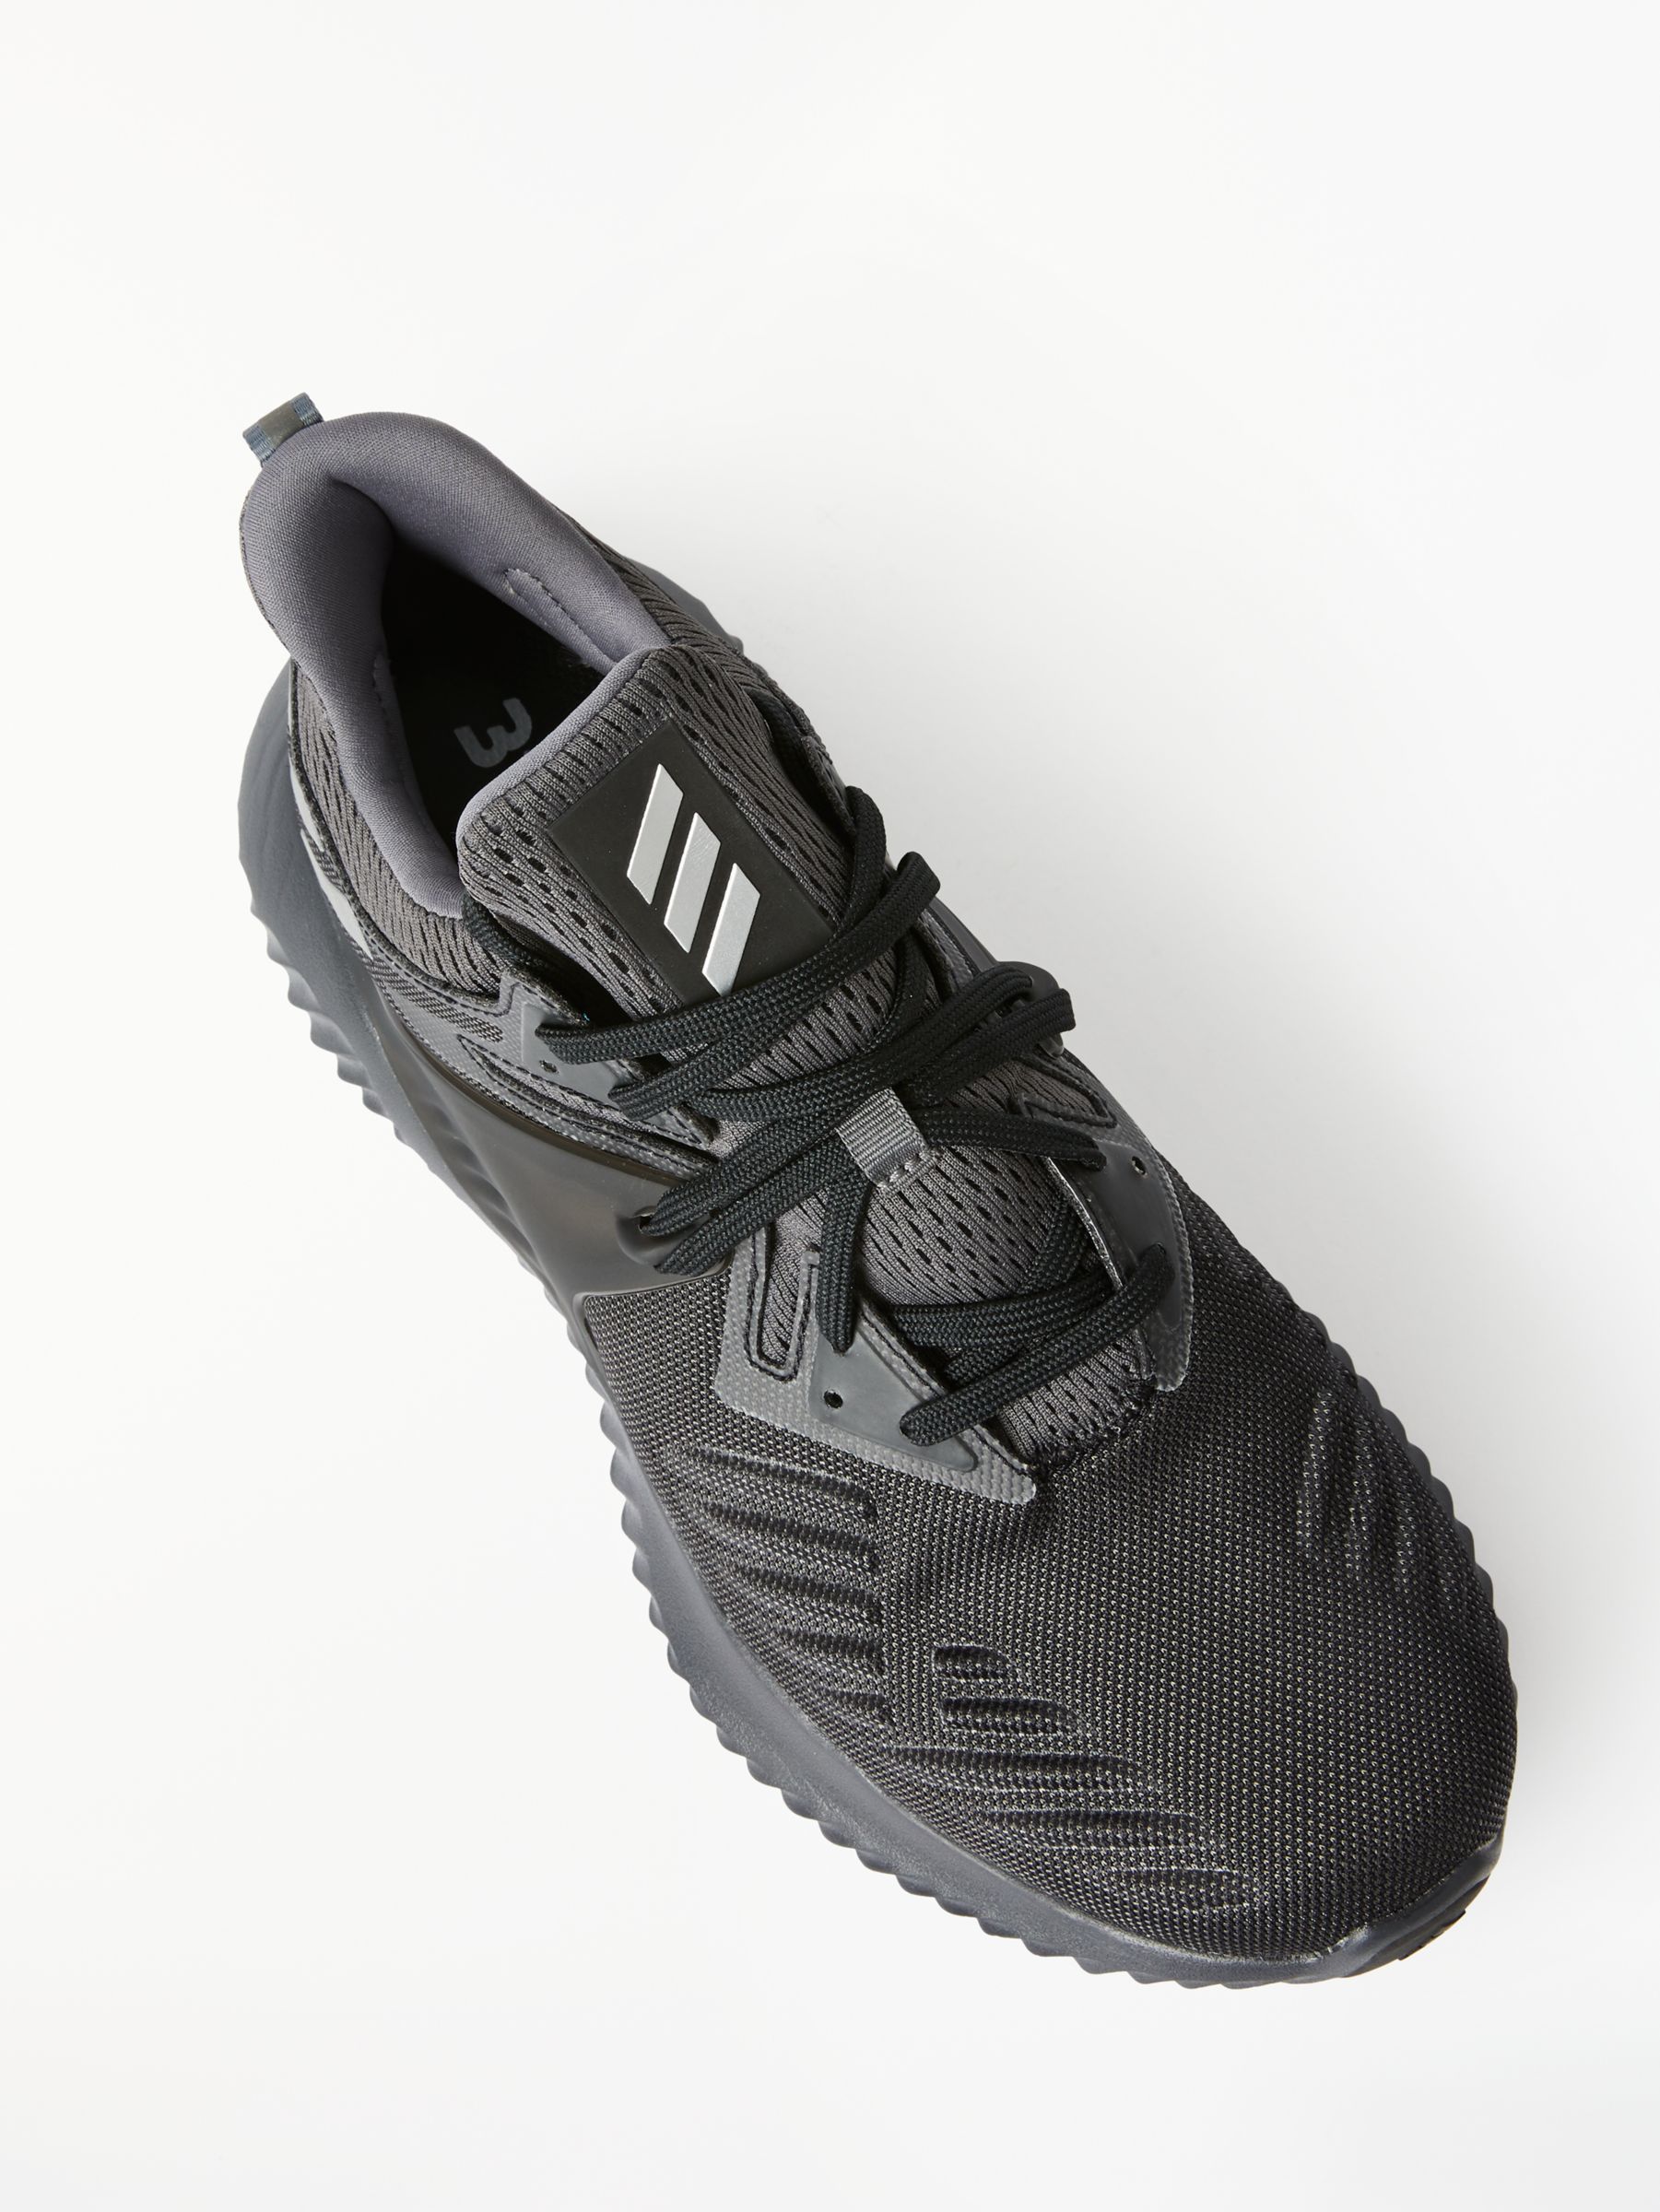 Adidas Alphabounce Beyond 2 0 Men S Running Shoes At John Lewis Partners